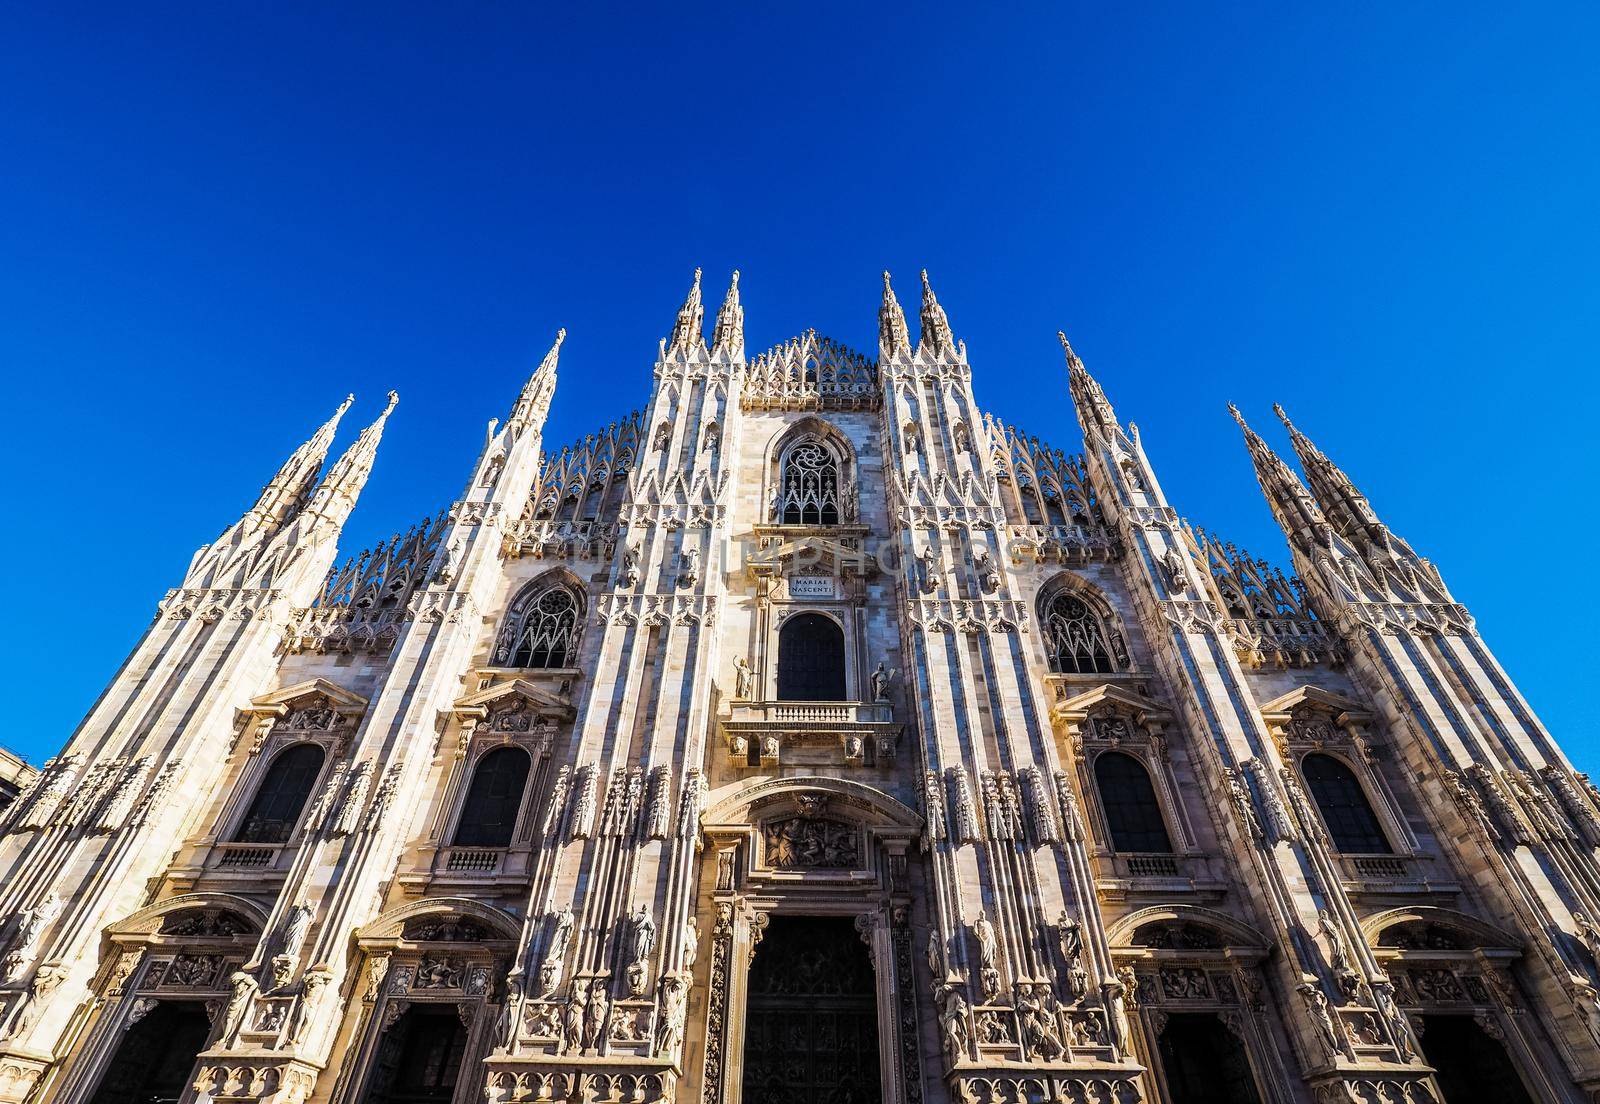 HDR Duomo di Milano Milan Cathedral by claudiodivizia